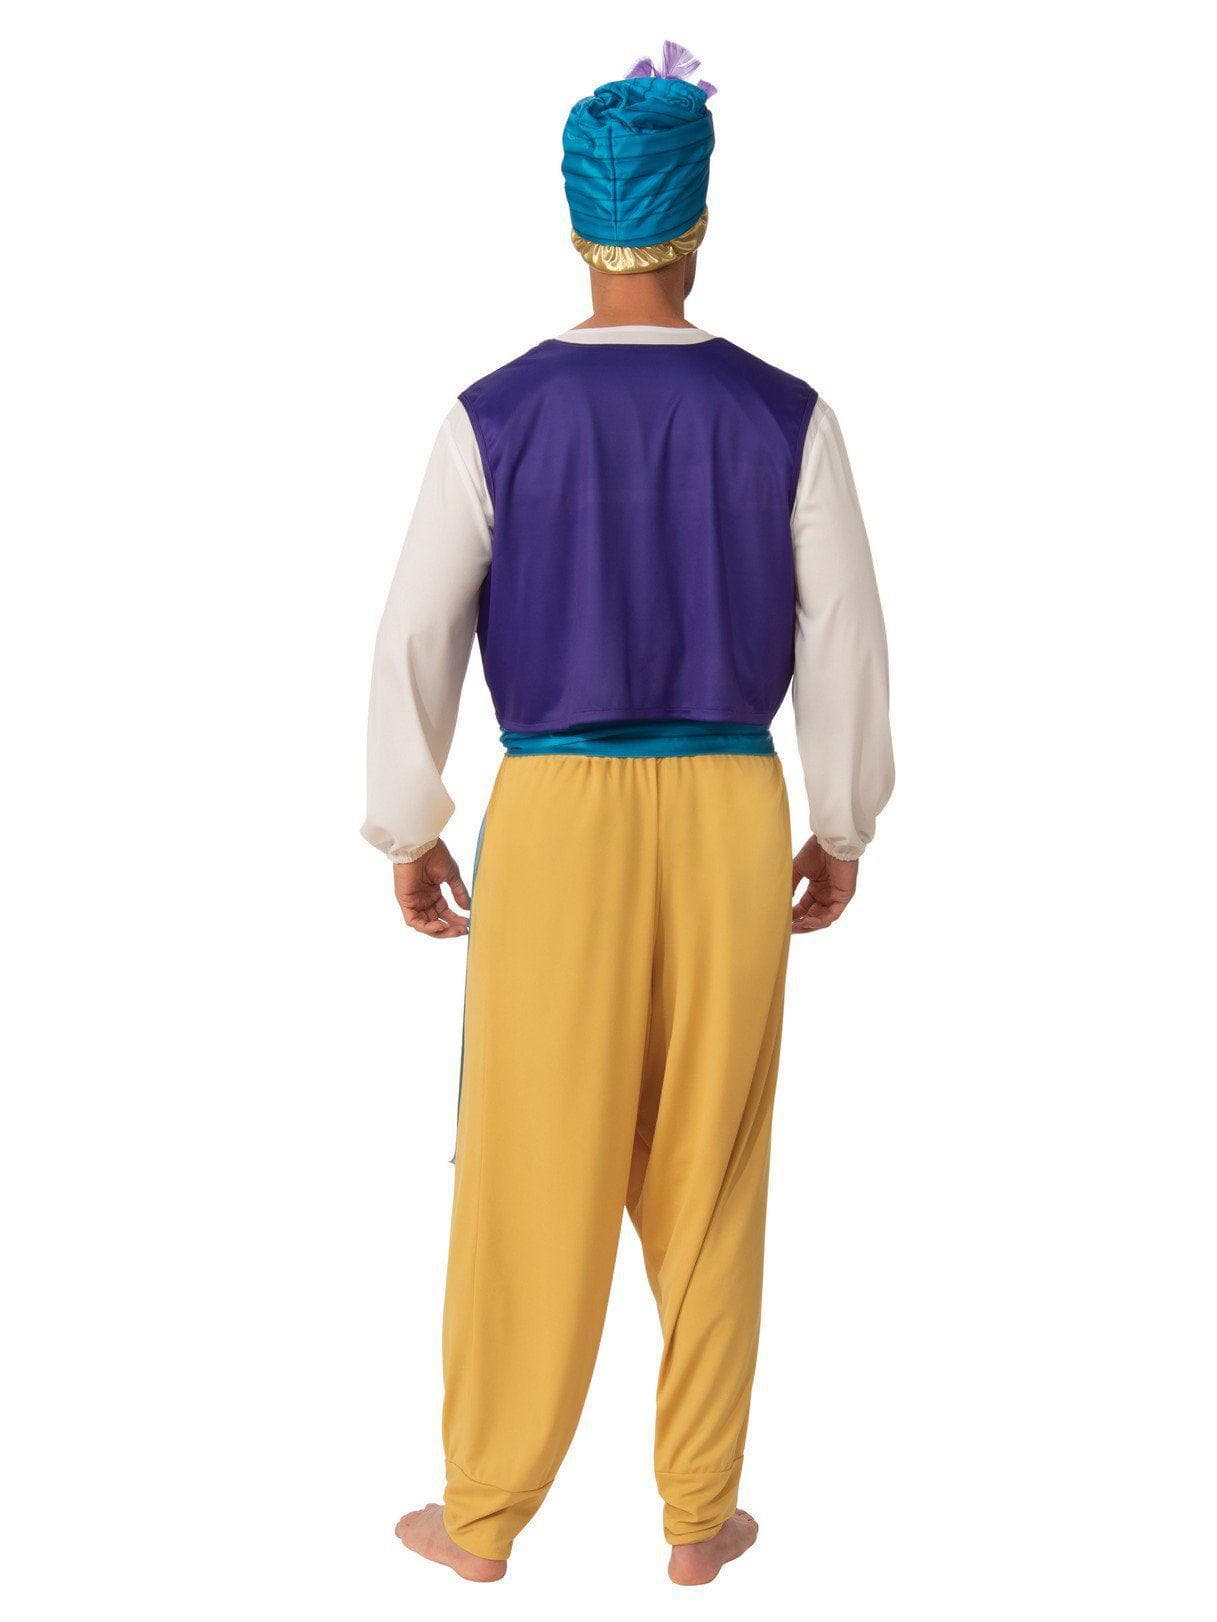 Men's Desert Prince Costume - costumes.com